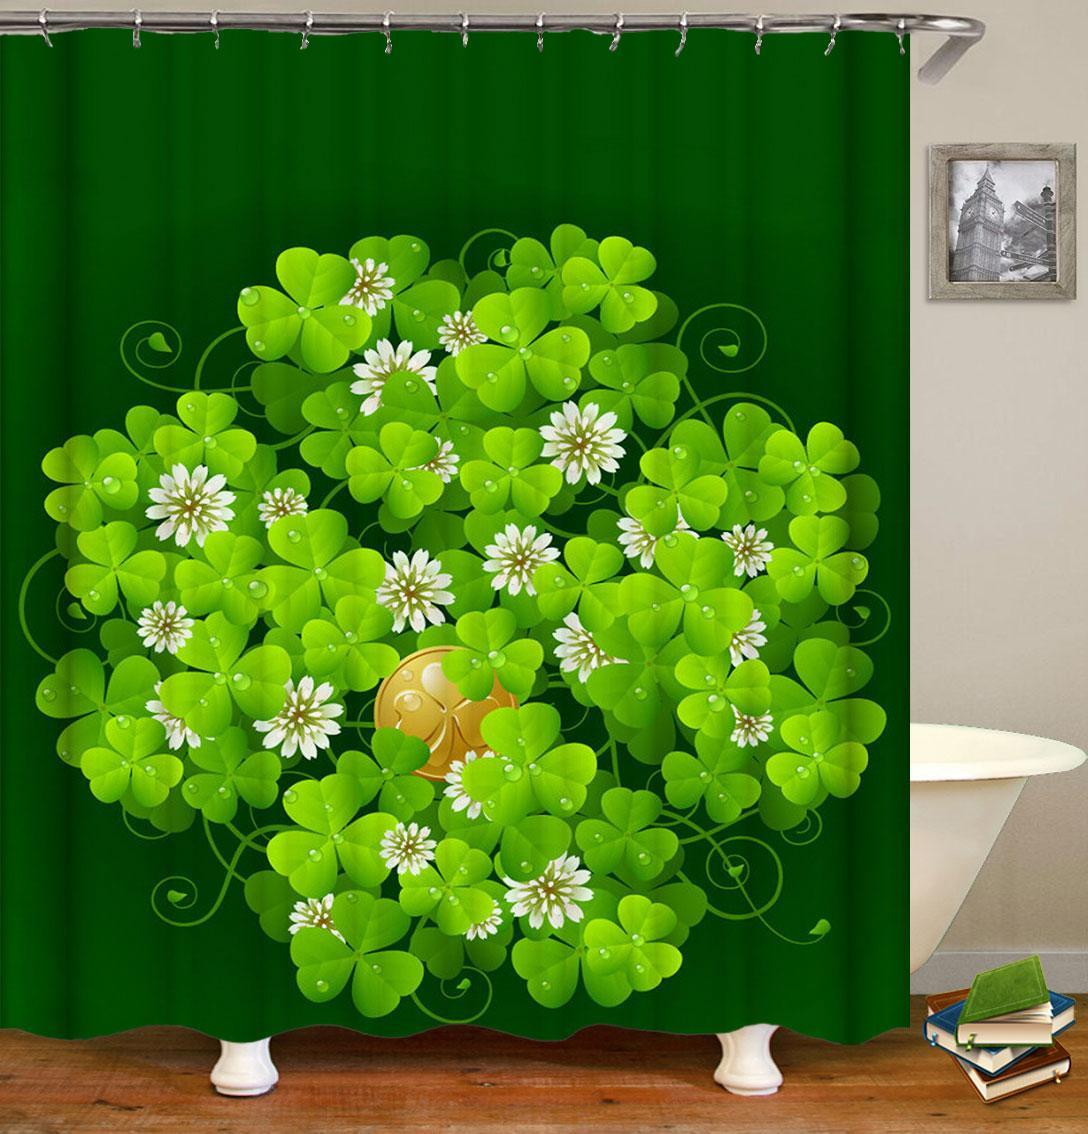 Green Clovers and Clover Flowers Shower Curtain 180cm x 180cm + 60cm x 40cm Set